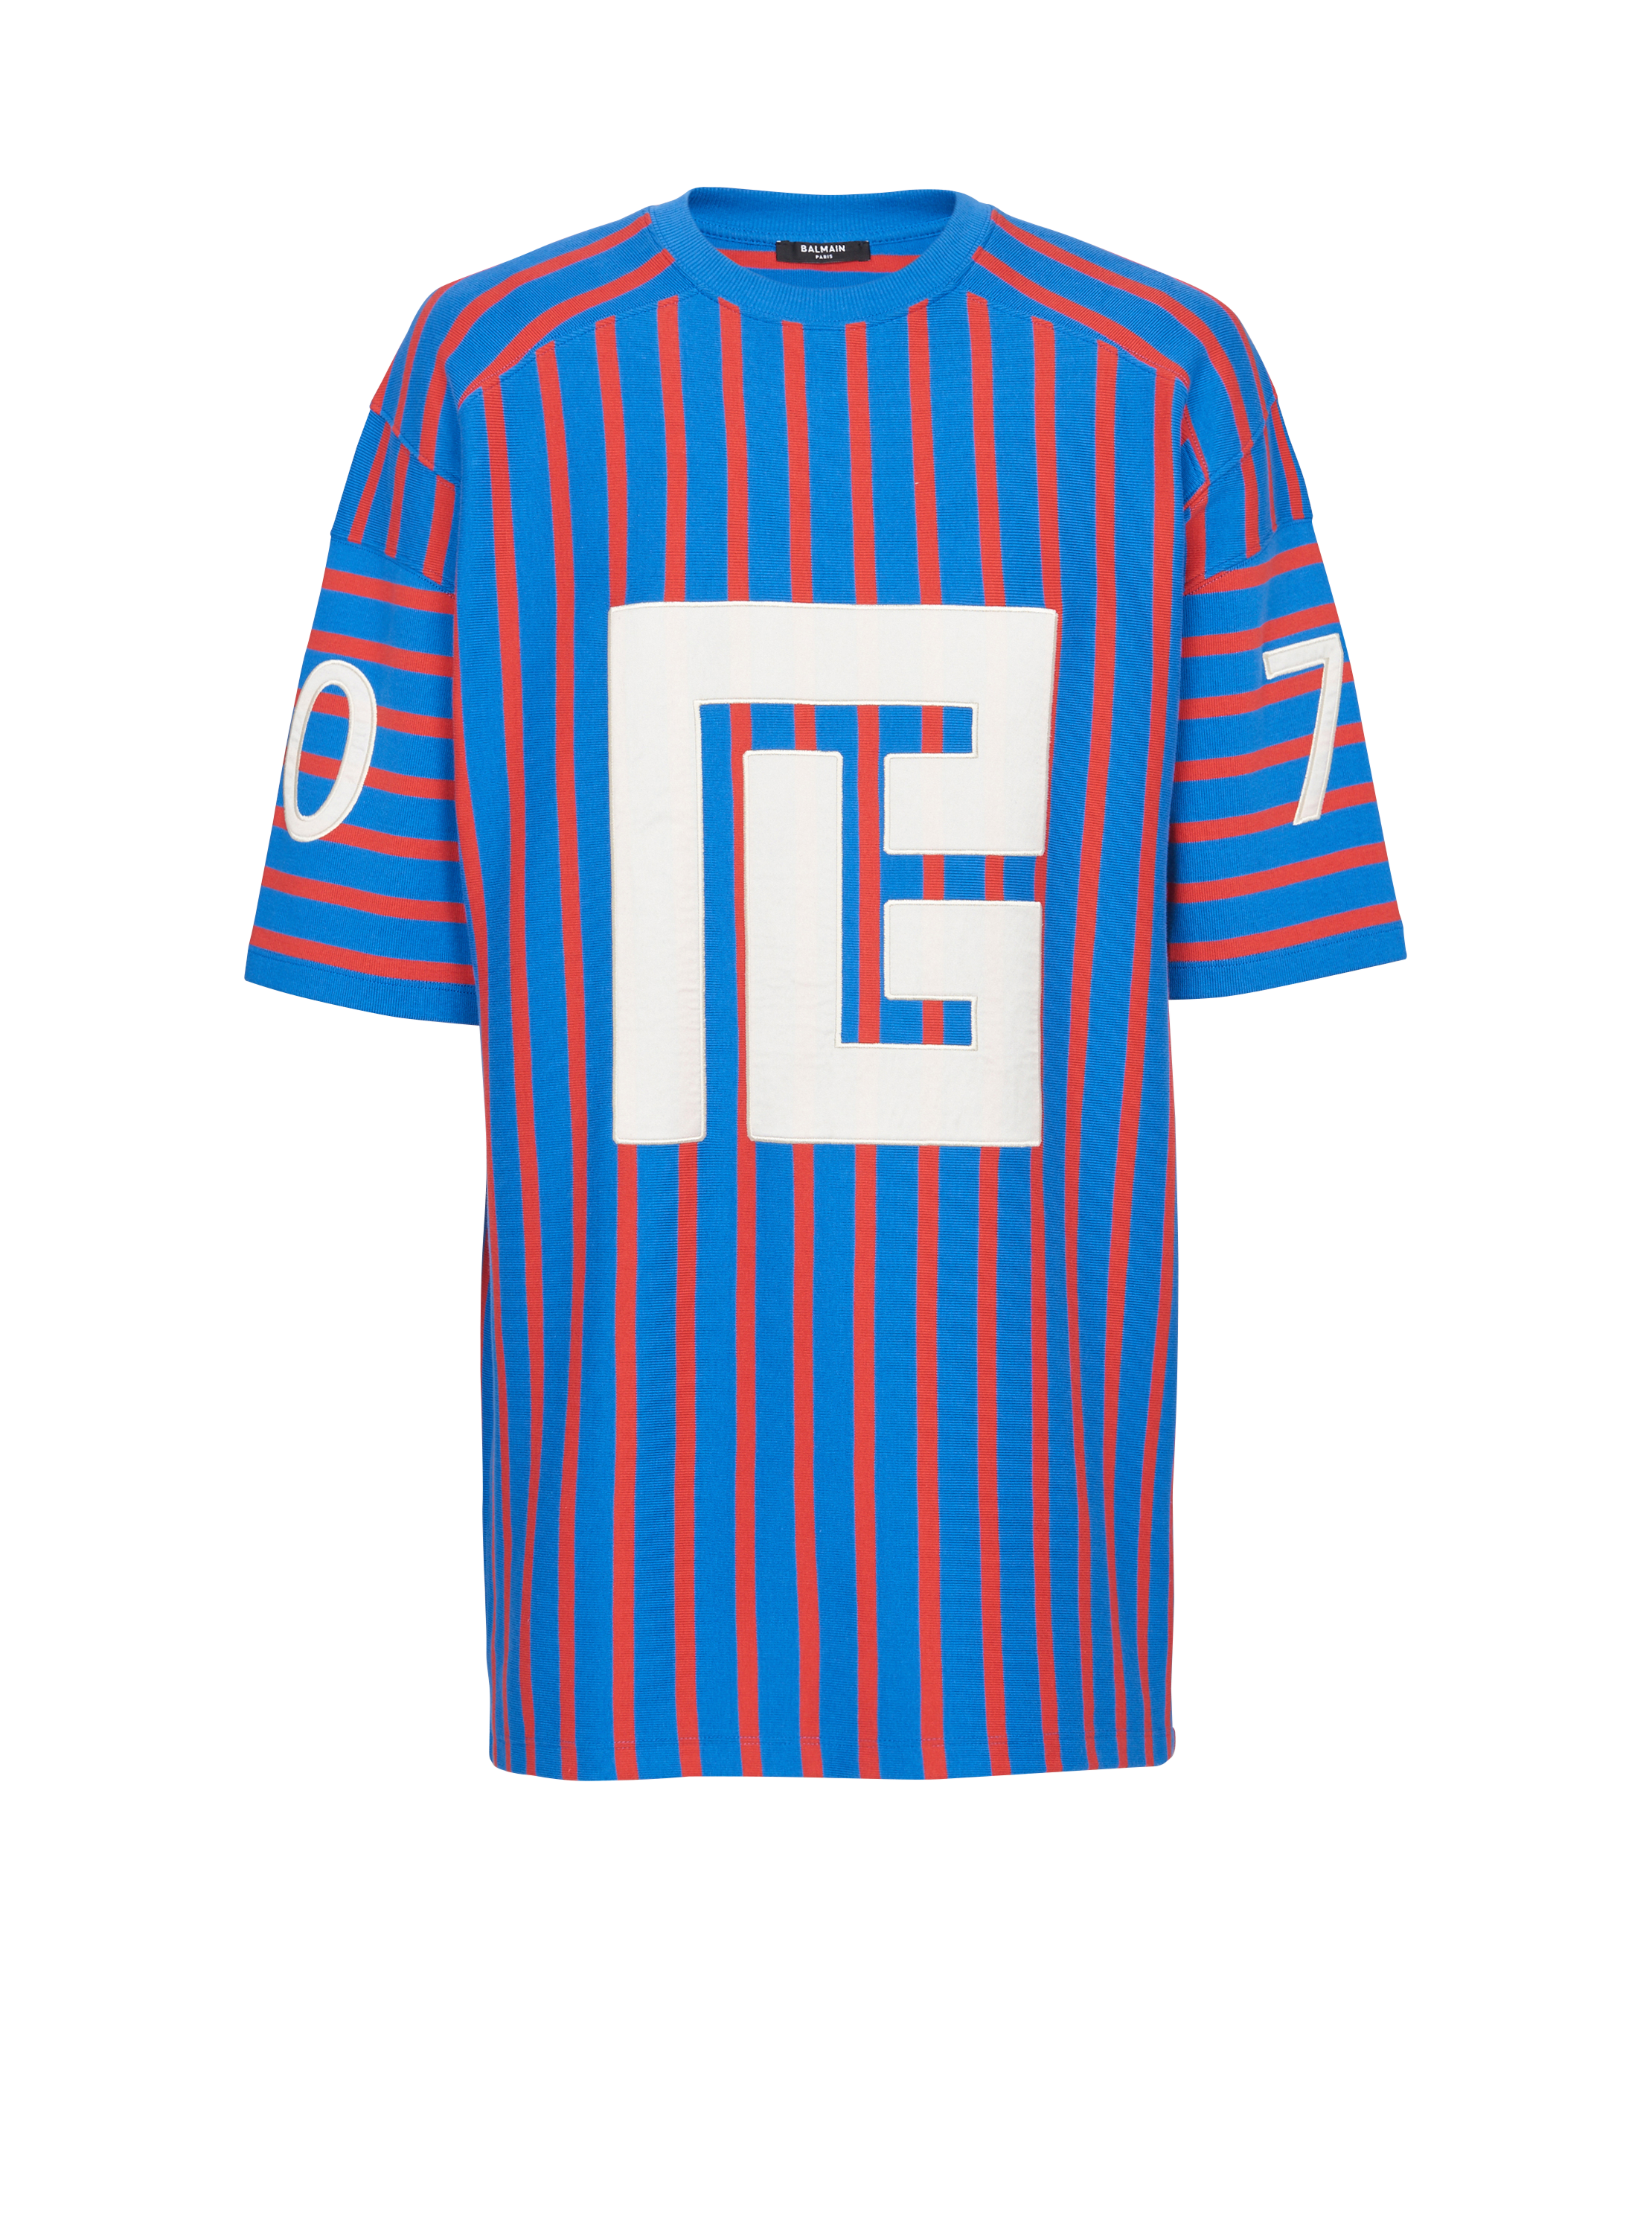 Camiseta Maxi PB Baseball, multicolor, hi-res